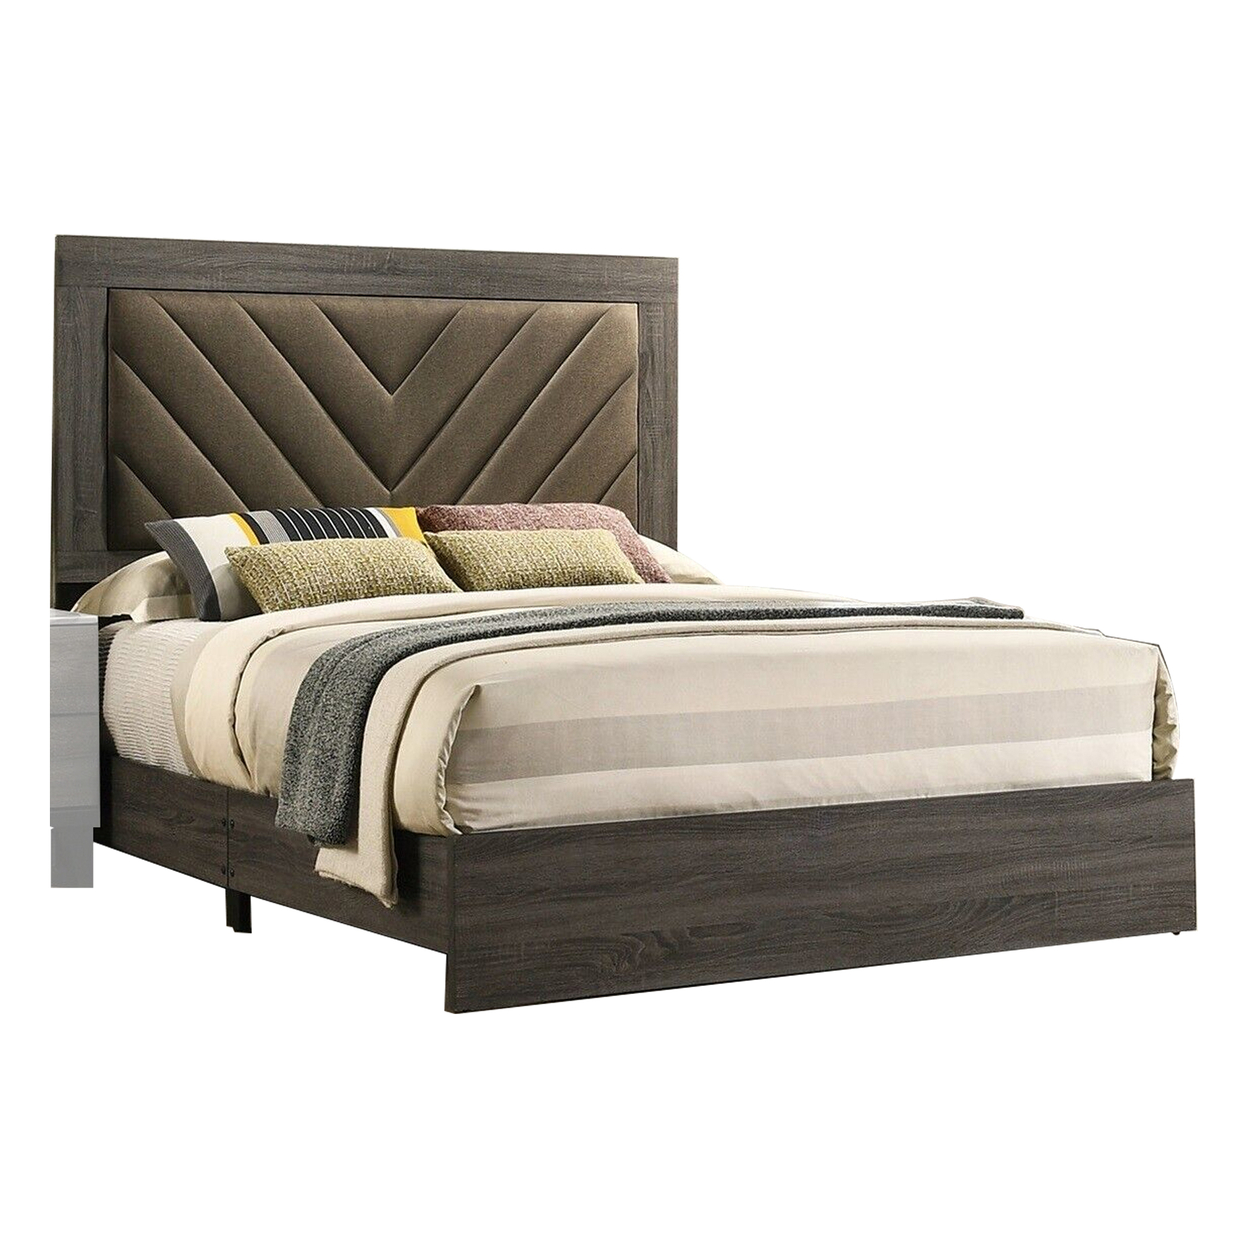 Cato Upholstered Queen Size Bed, Chevron Tufted Brown Headboard, Dark Gray - Saltoro Sherpi